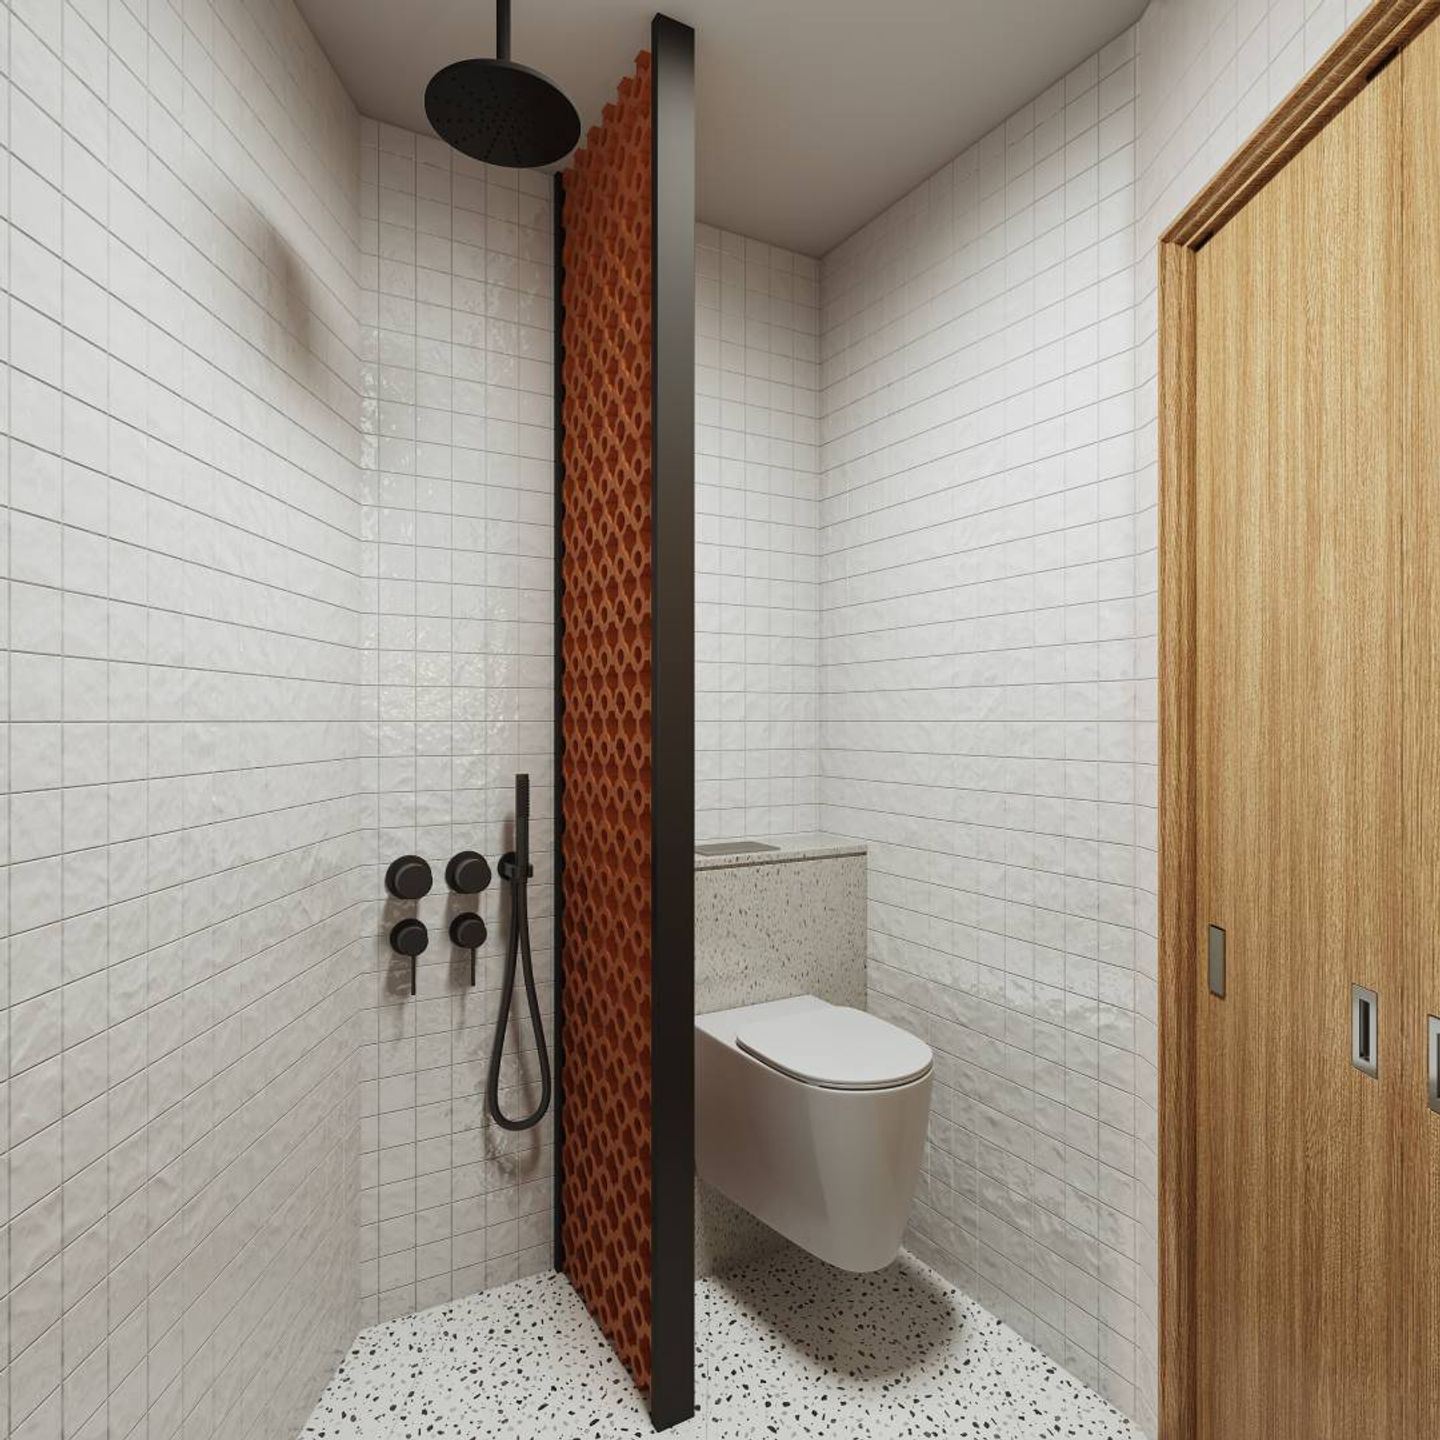 Minimalist Bathroom Design With White Tiles - Livspace